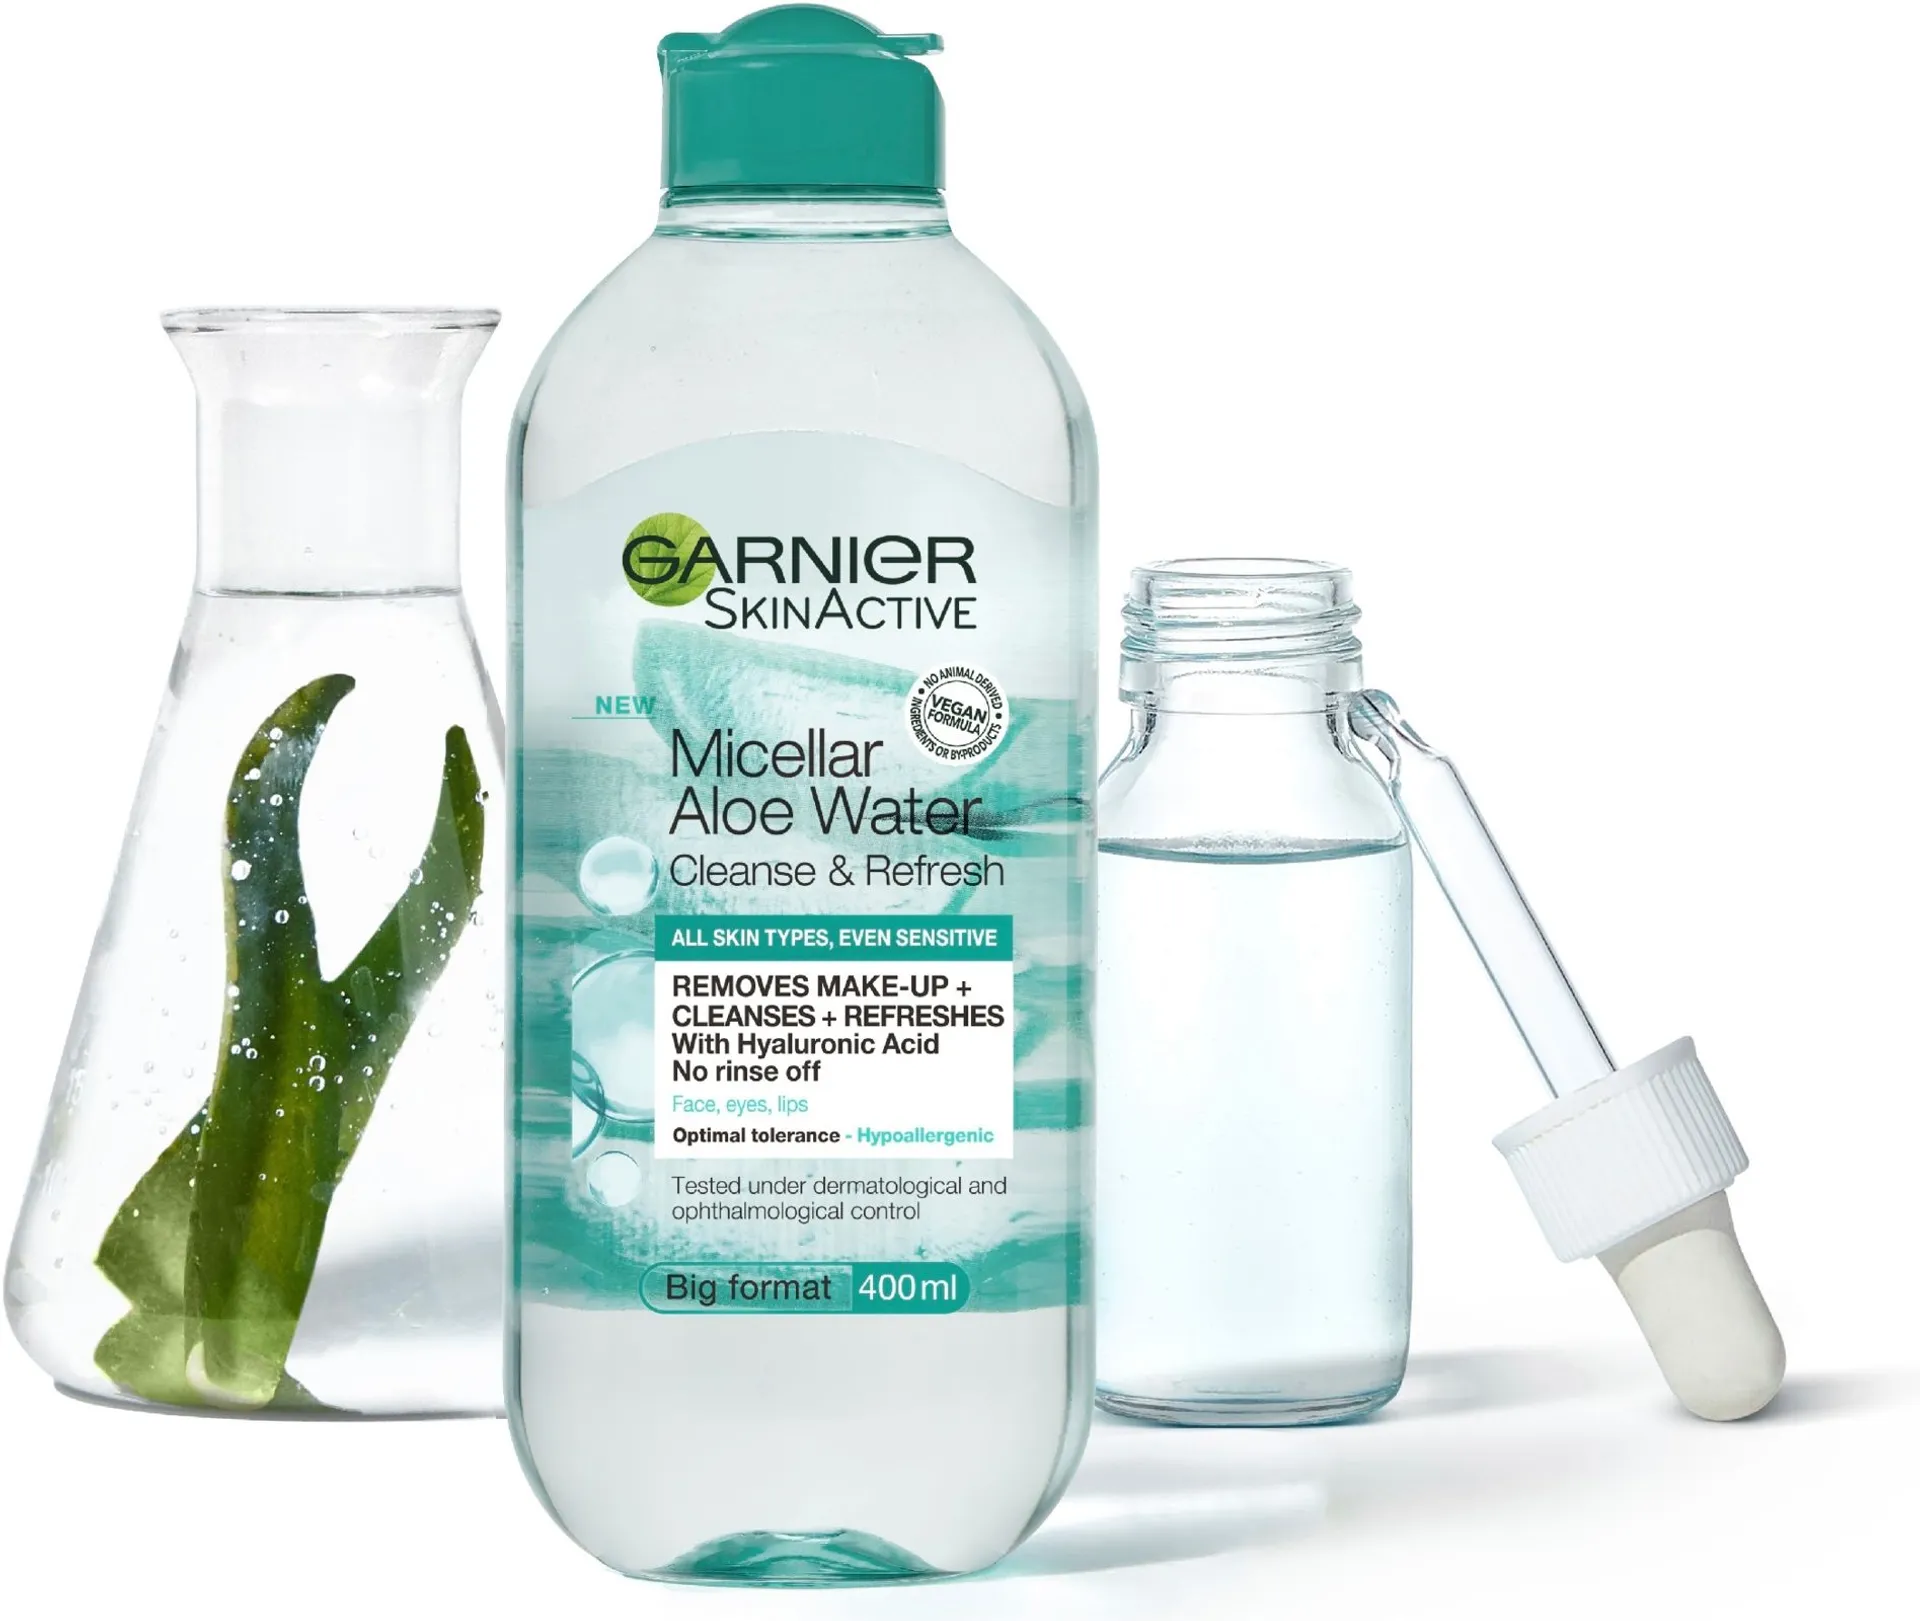 Garnier SkinActive Micellar Aloe Water Cleanse & Refresh puhdistusvesi 400ml - 4